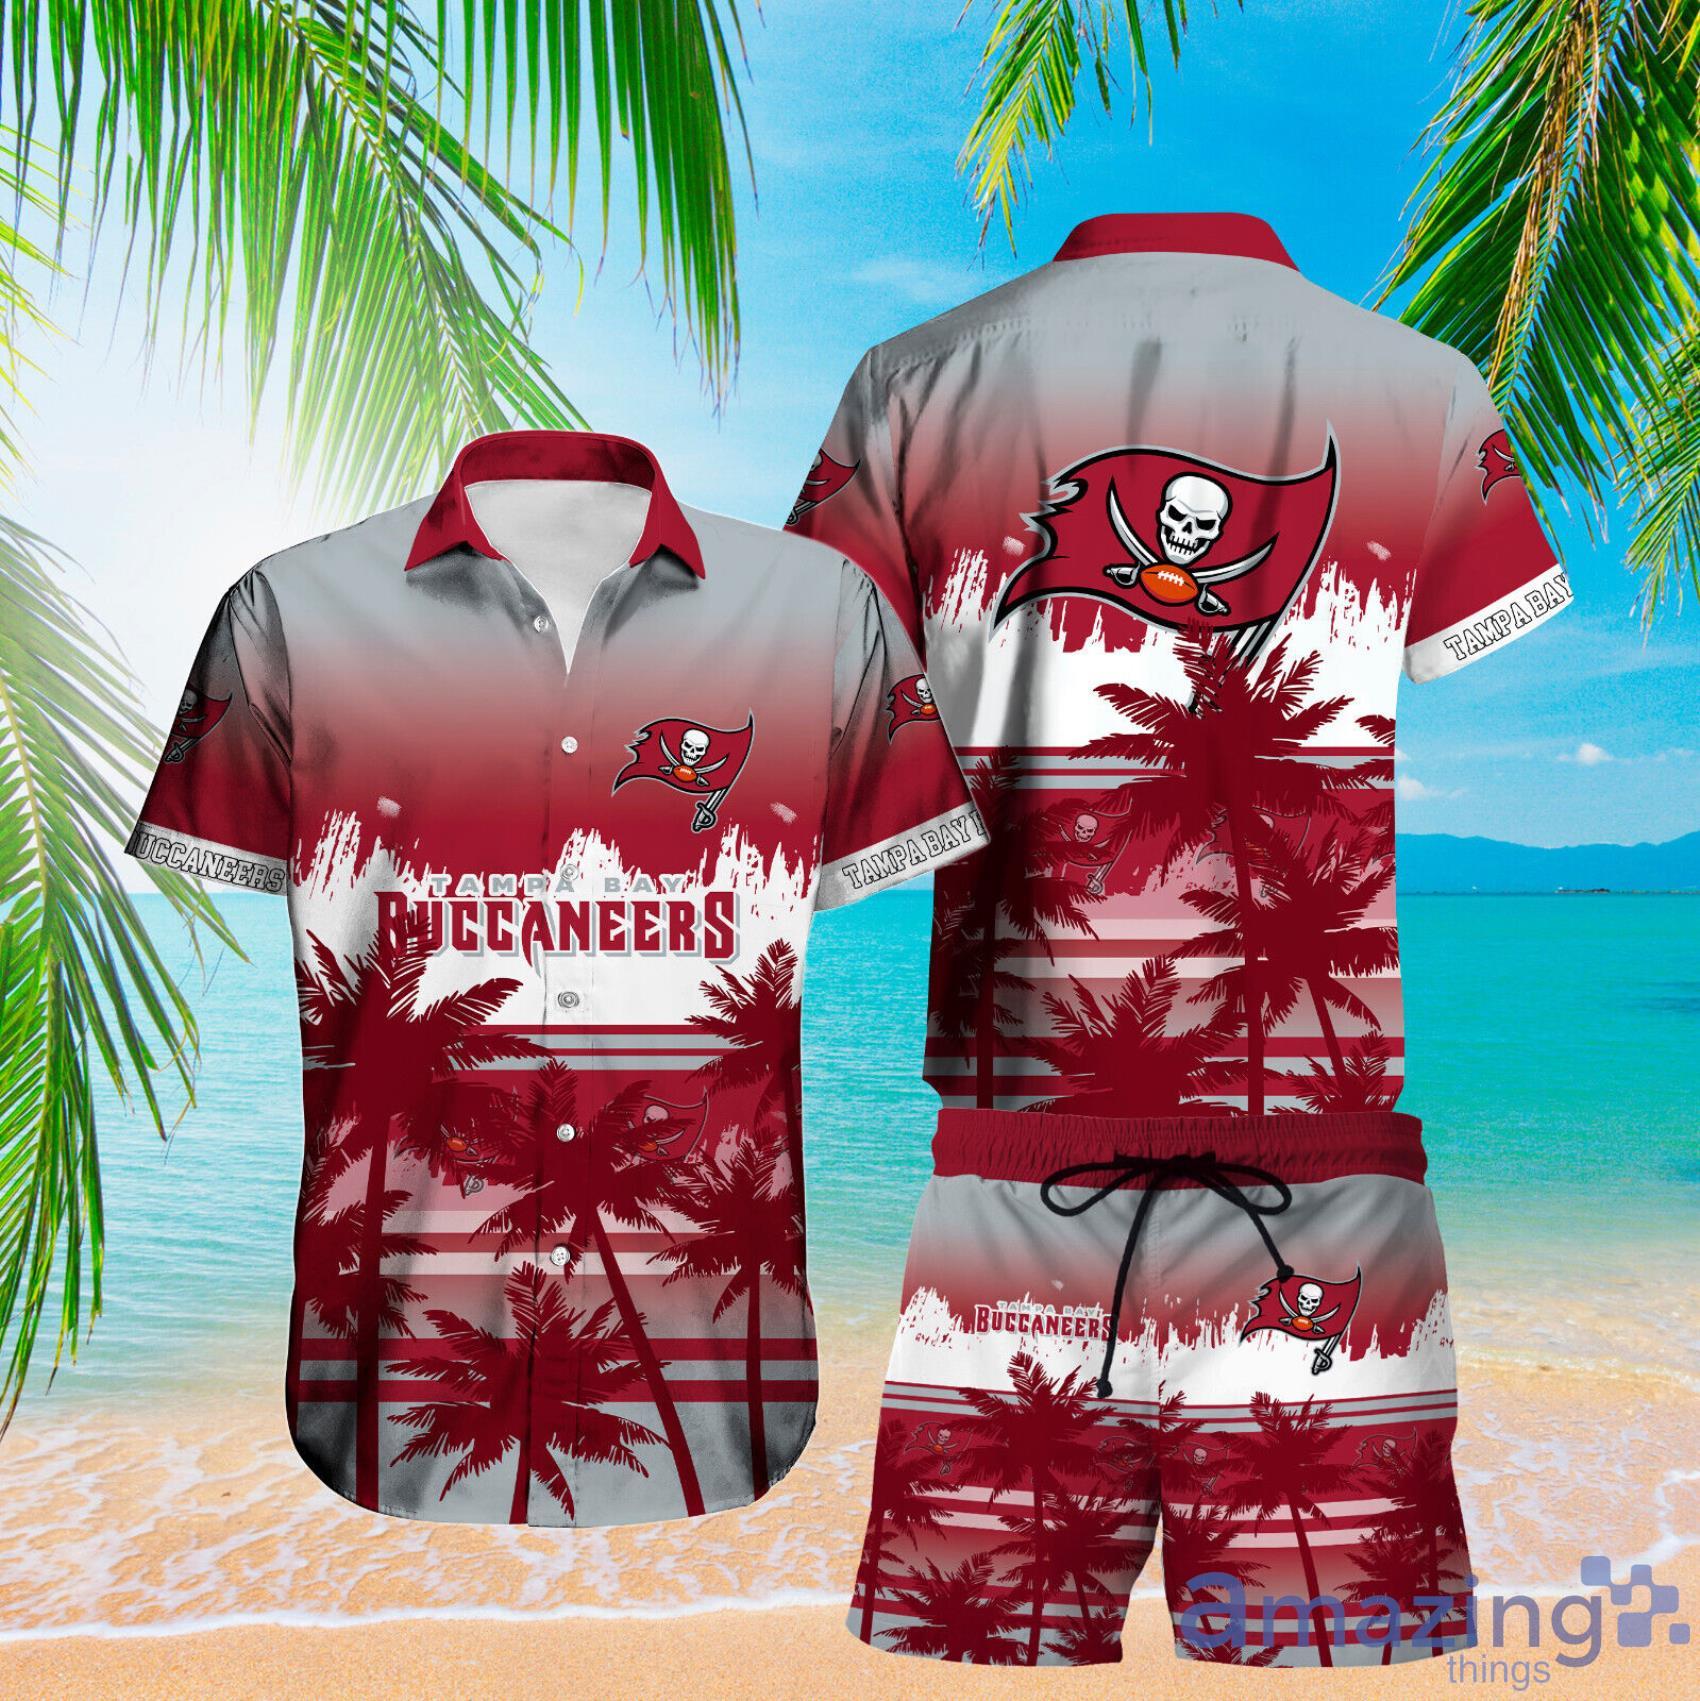 Louis Vuitton Colorful Textures Combo Hawaiian Shirt, Beach Shorts